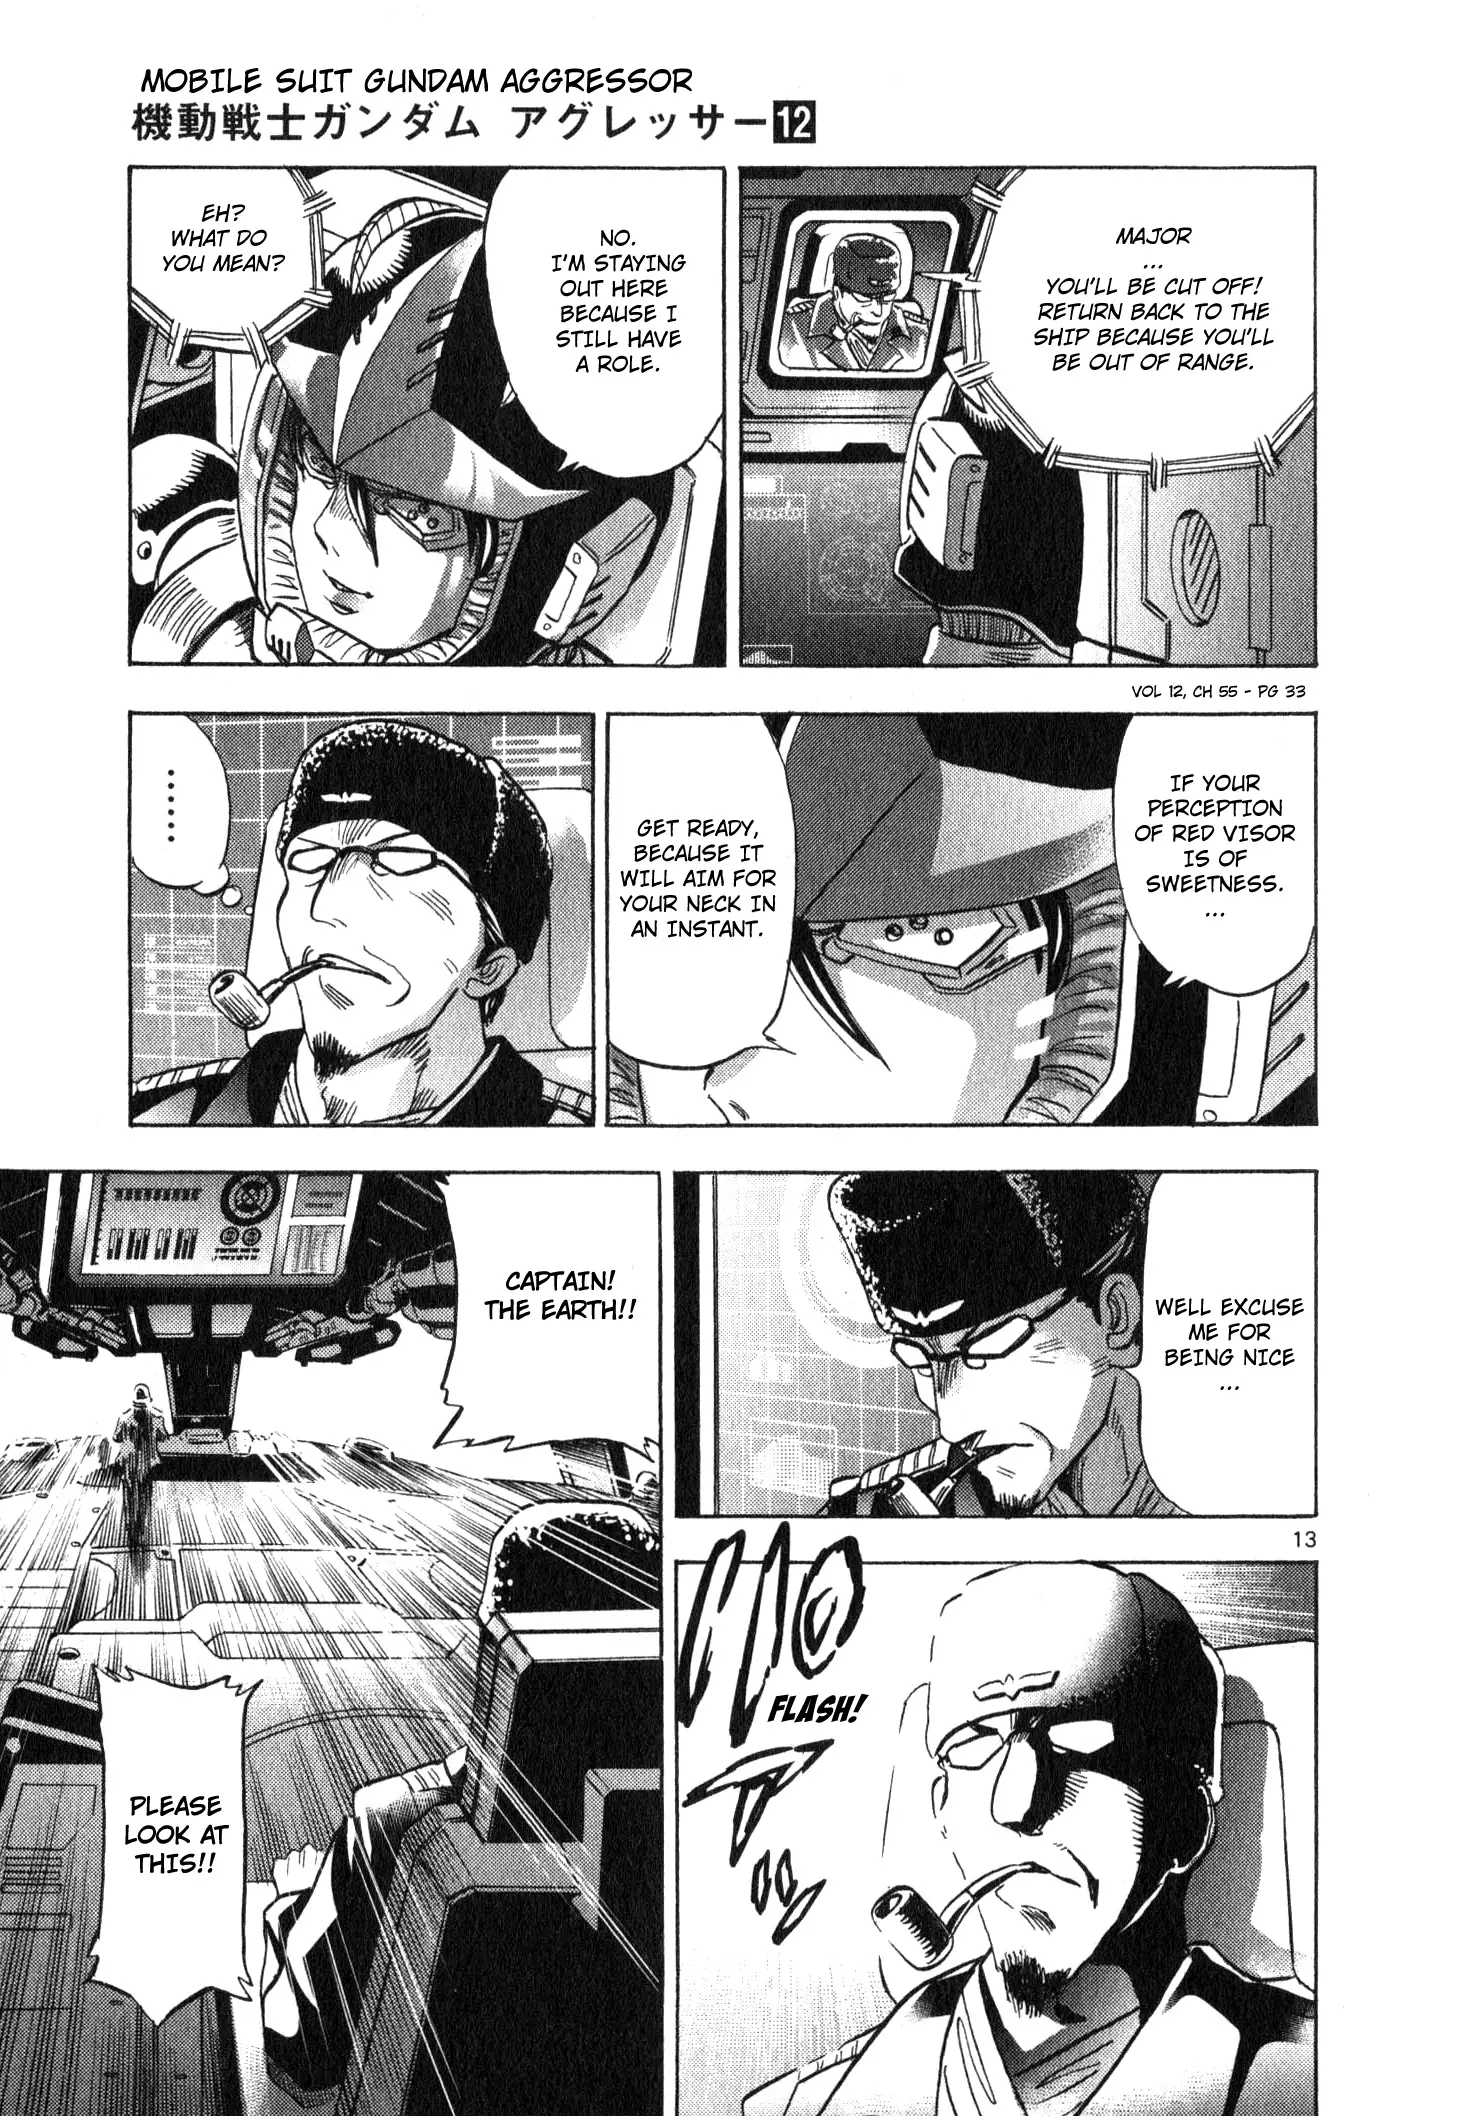 Mobile Suit Gundam Aggressor - 56 page 16-8c2b8e8e